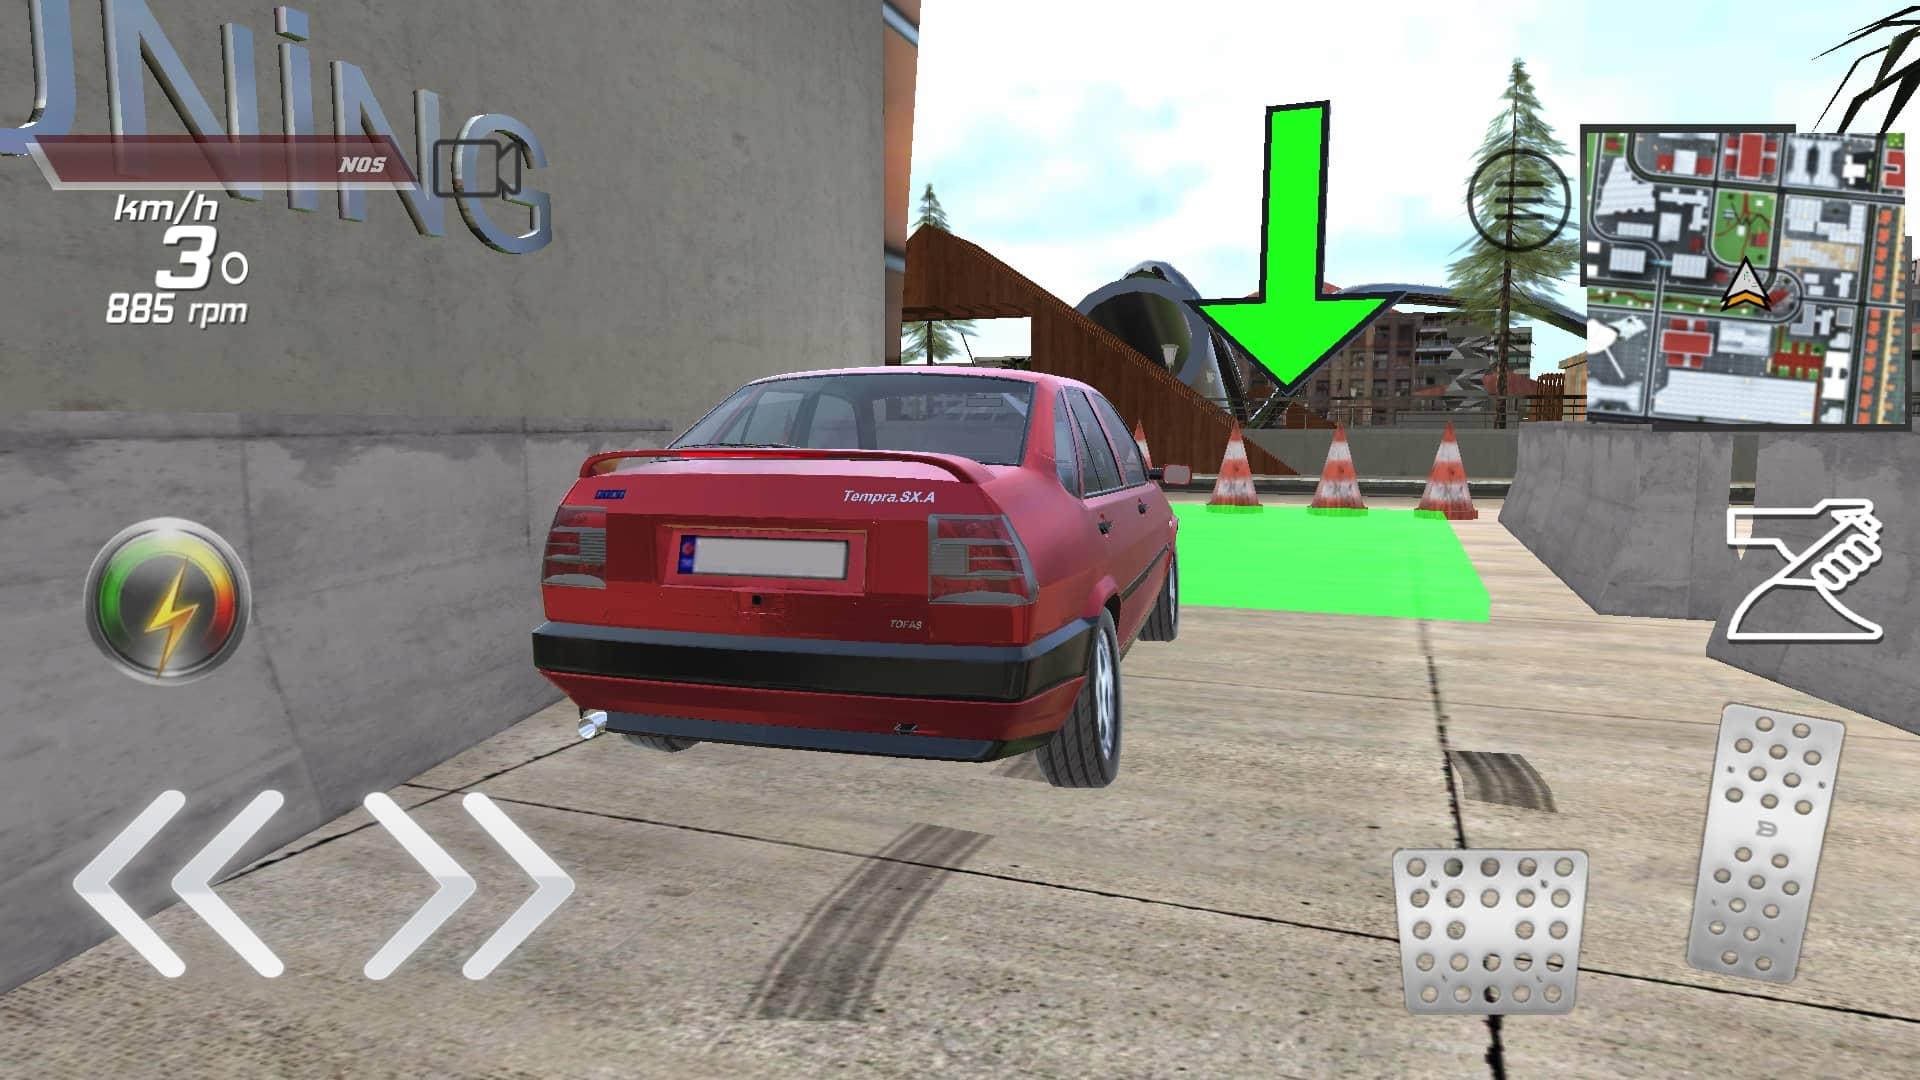 Tempra - City Simulation, Quests and Parking 1.7 Screenshot 22